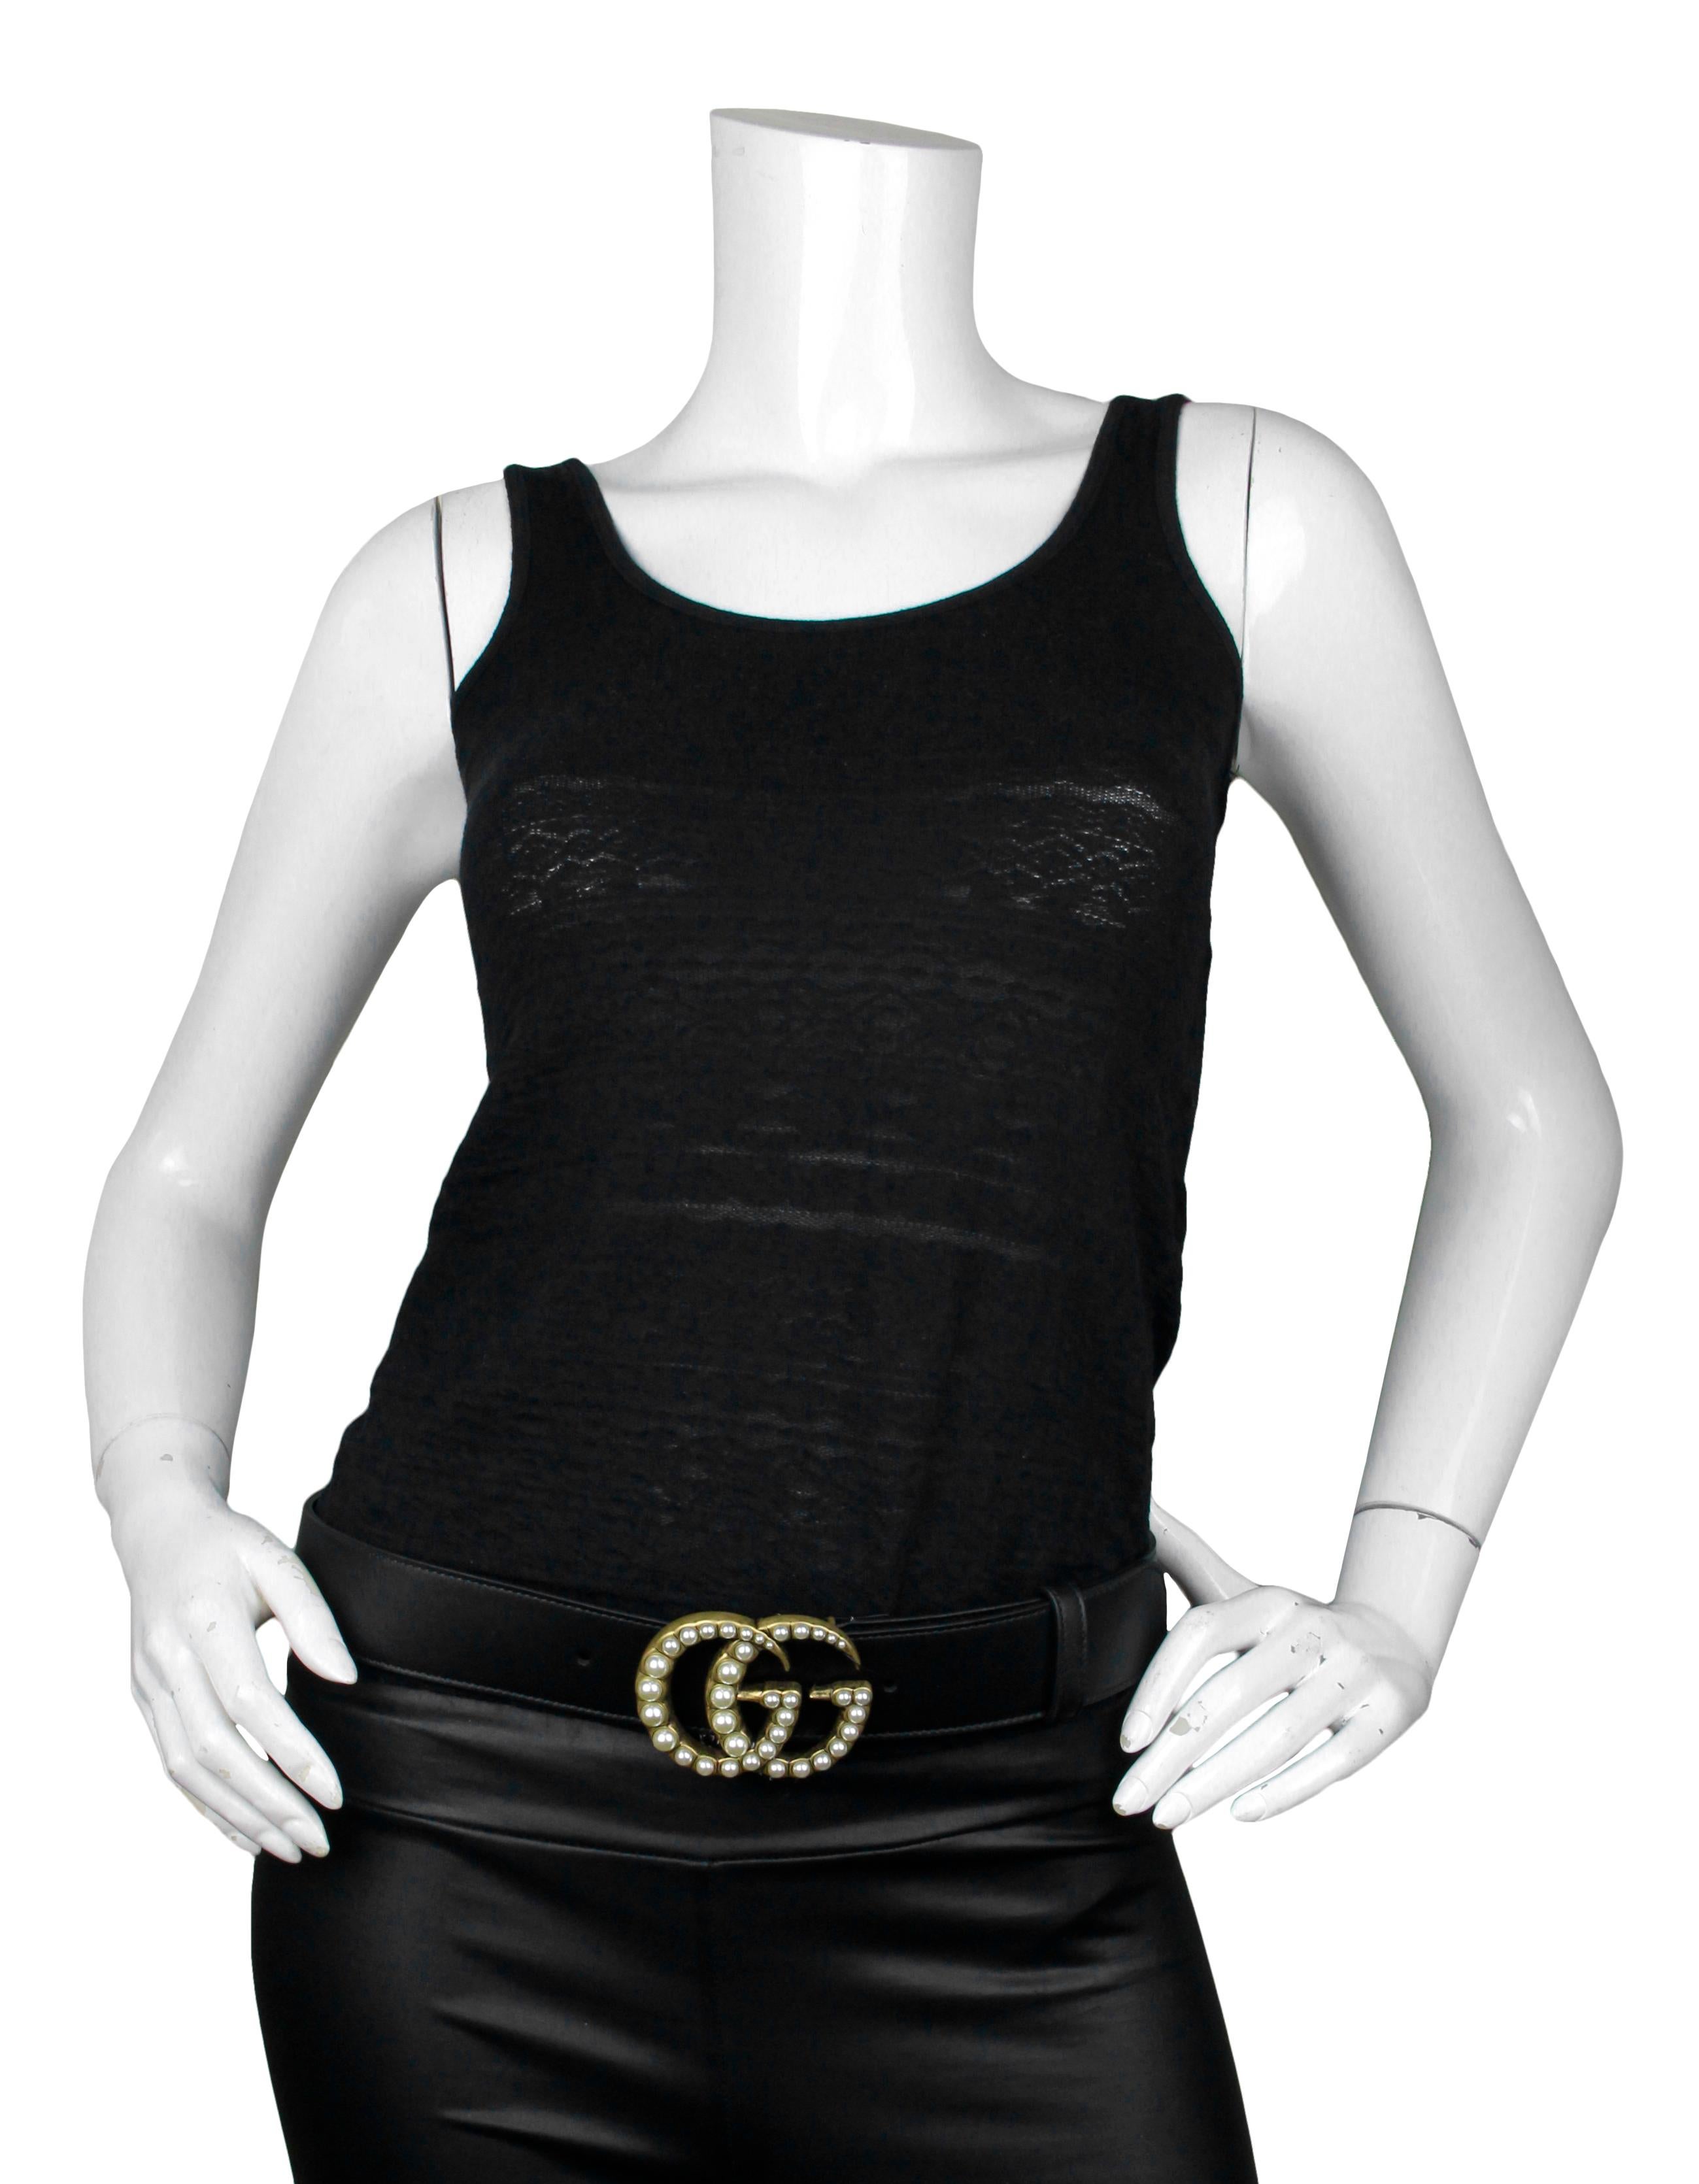 Gucci Black Leather Belt w. Pearl Double G Logo Buckle sz 85/34